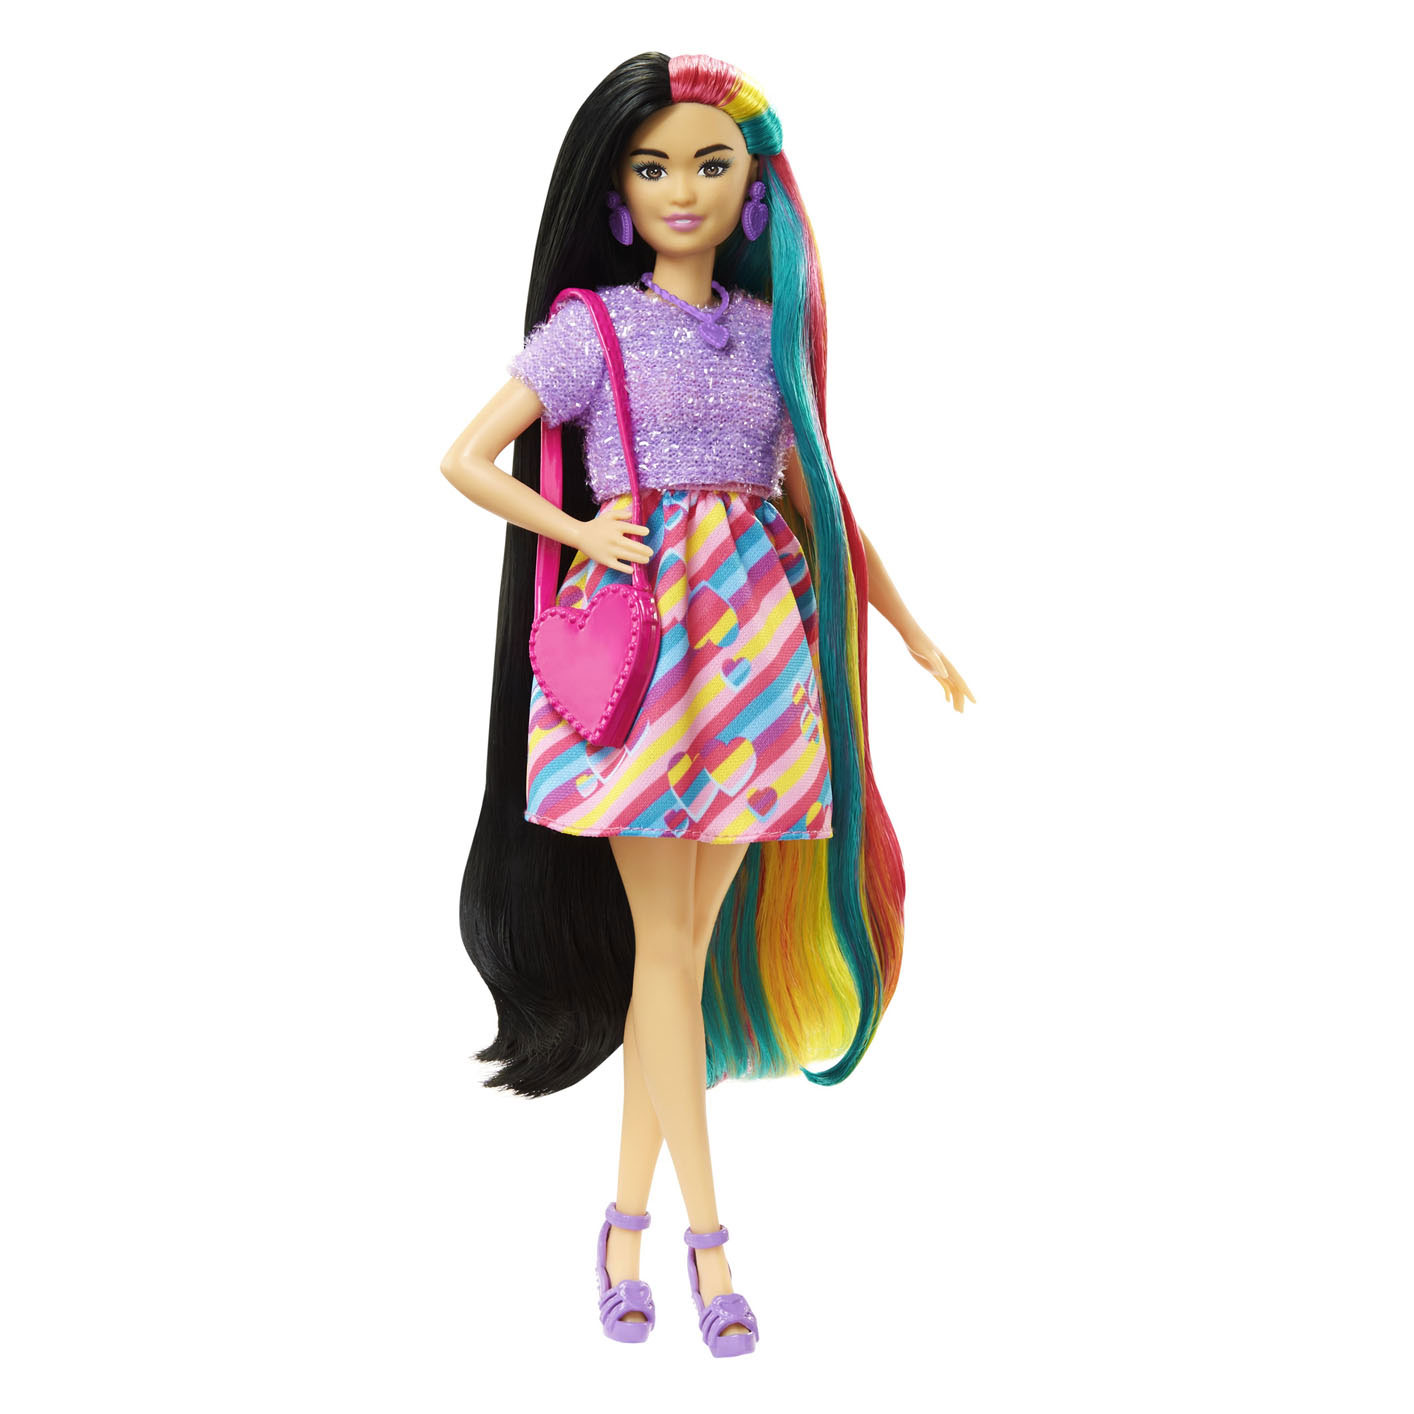 Hair Doll 3 - Hearts online kopen? | Lobbes Speelgoed